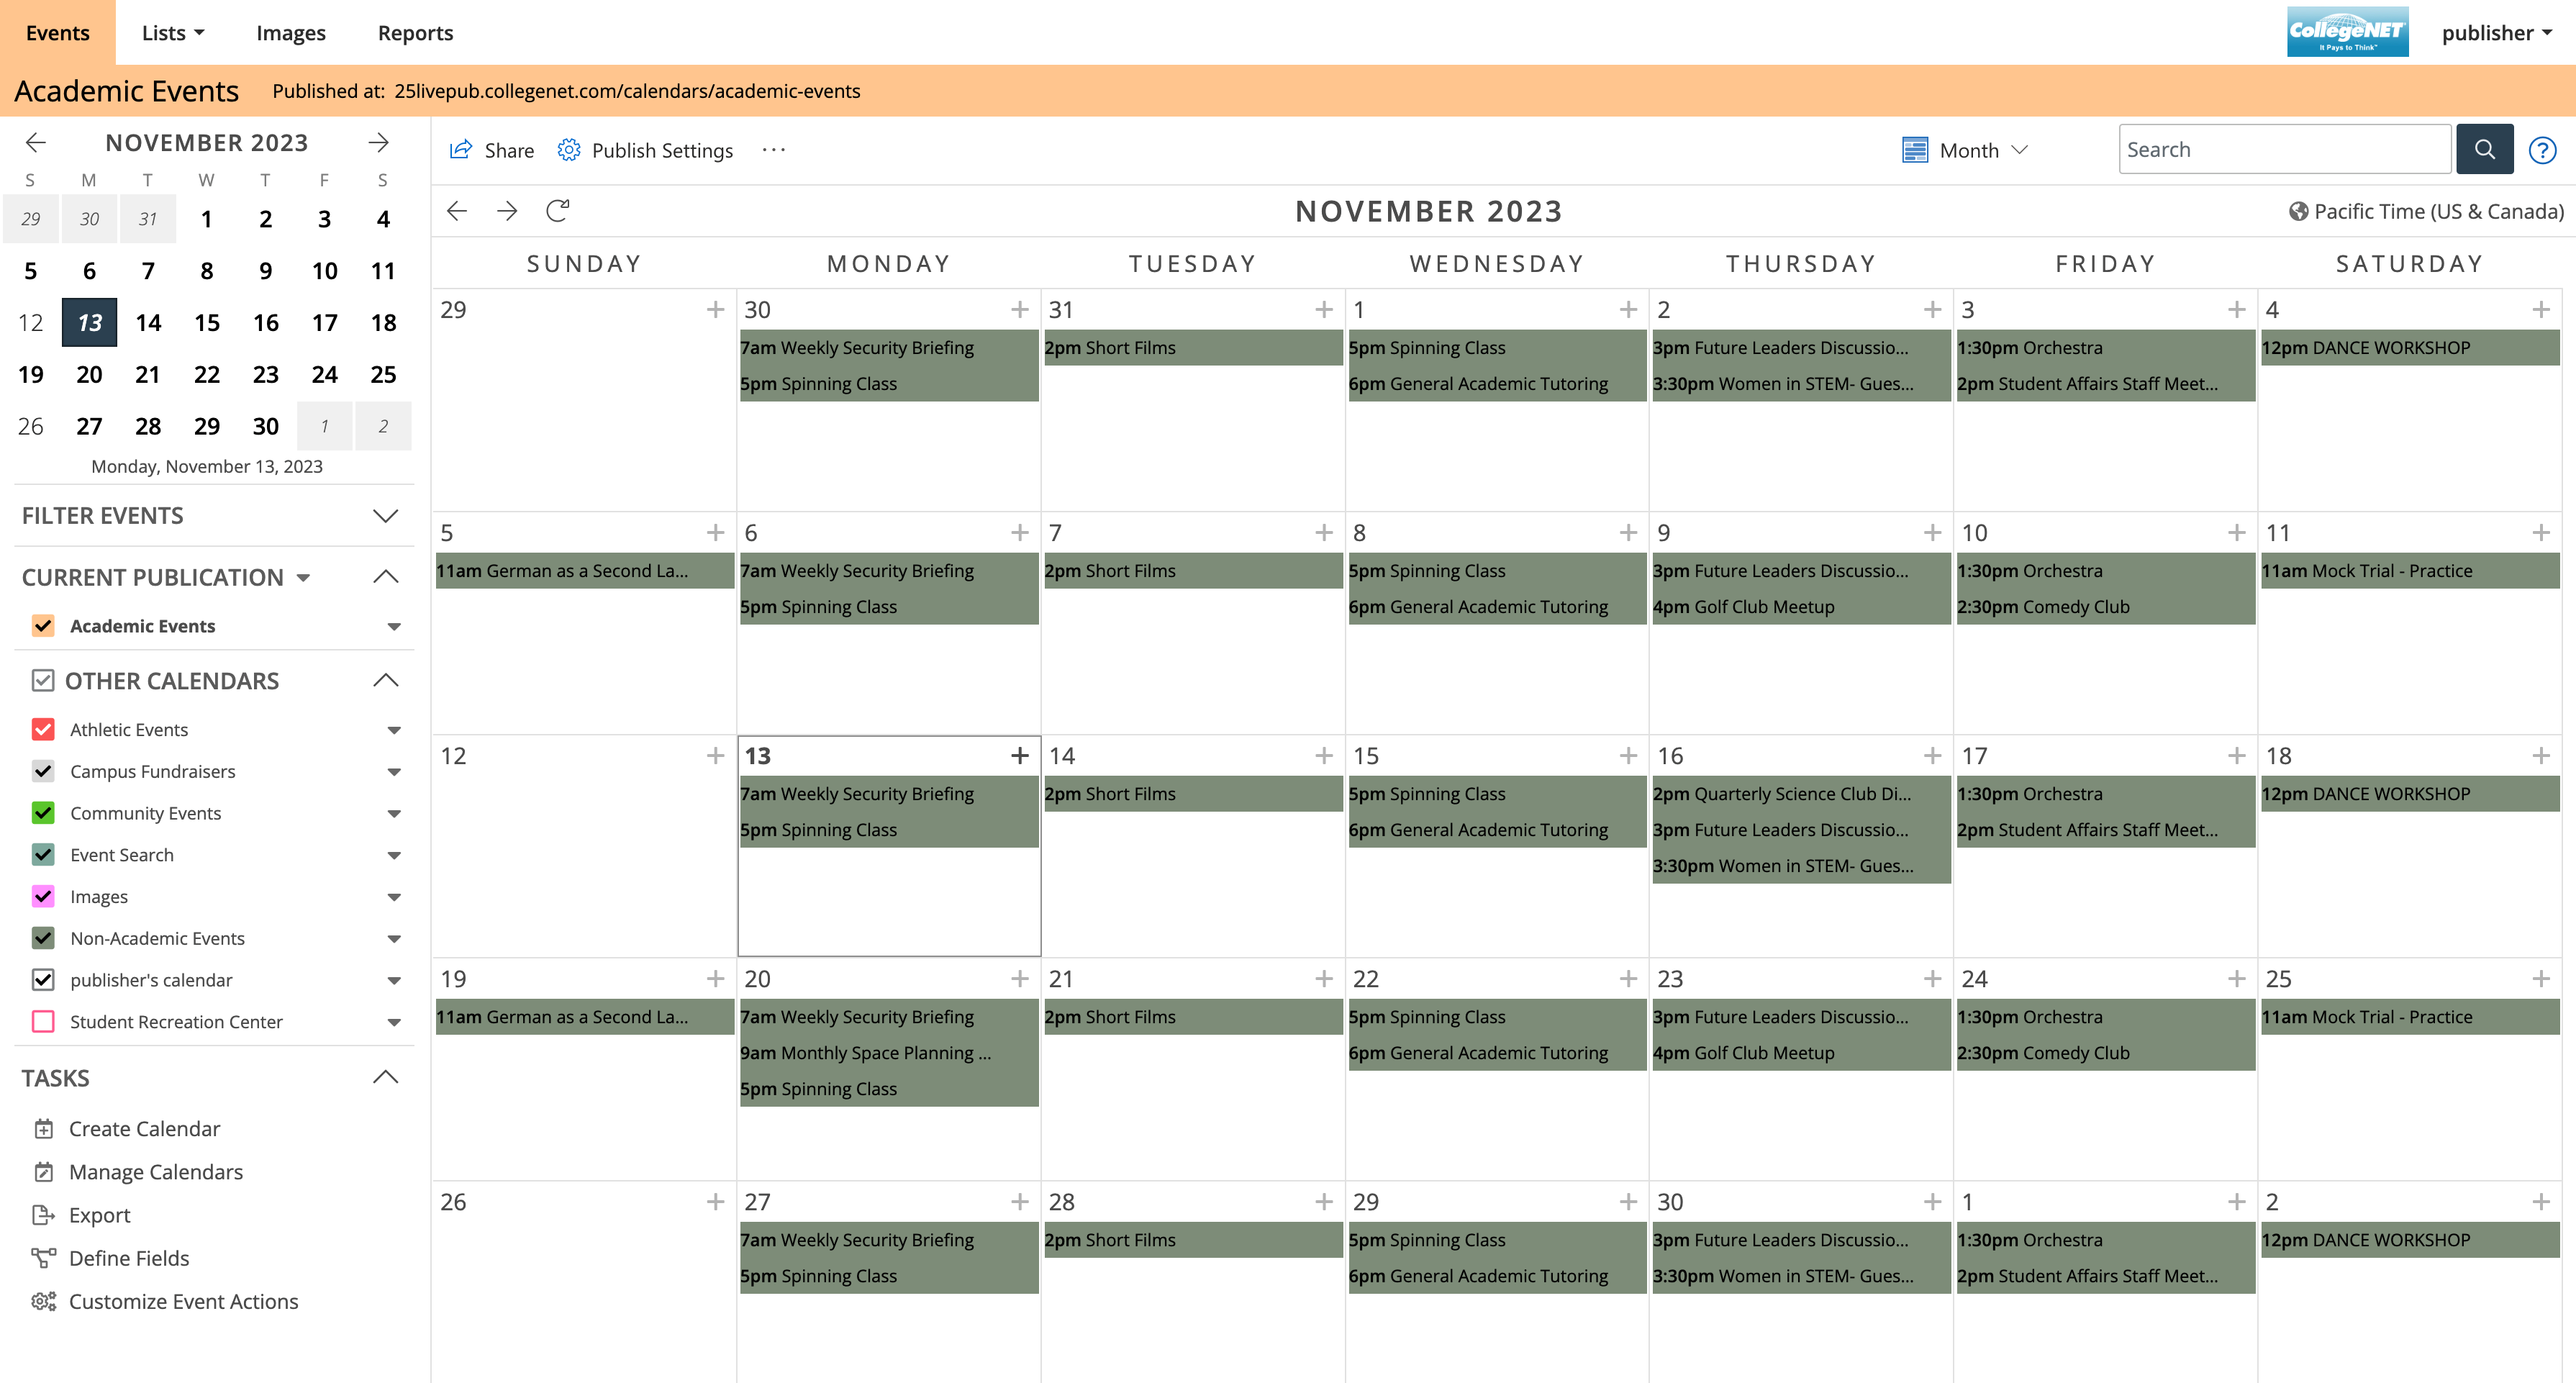 Publisher calendar example